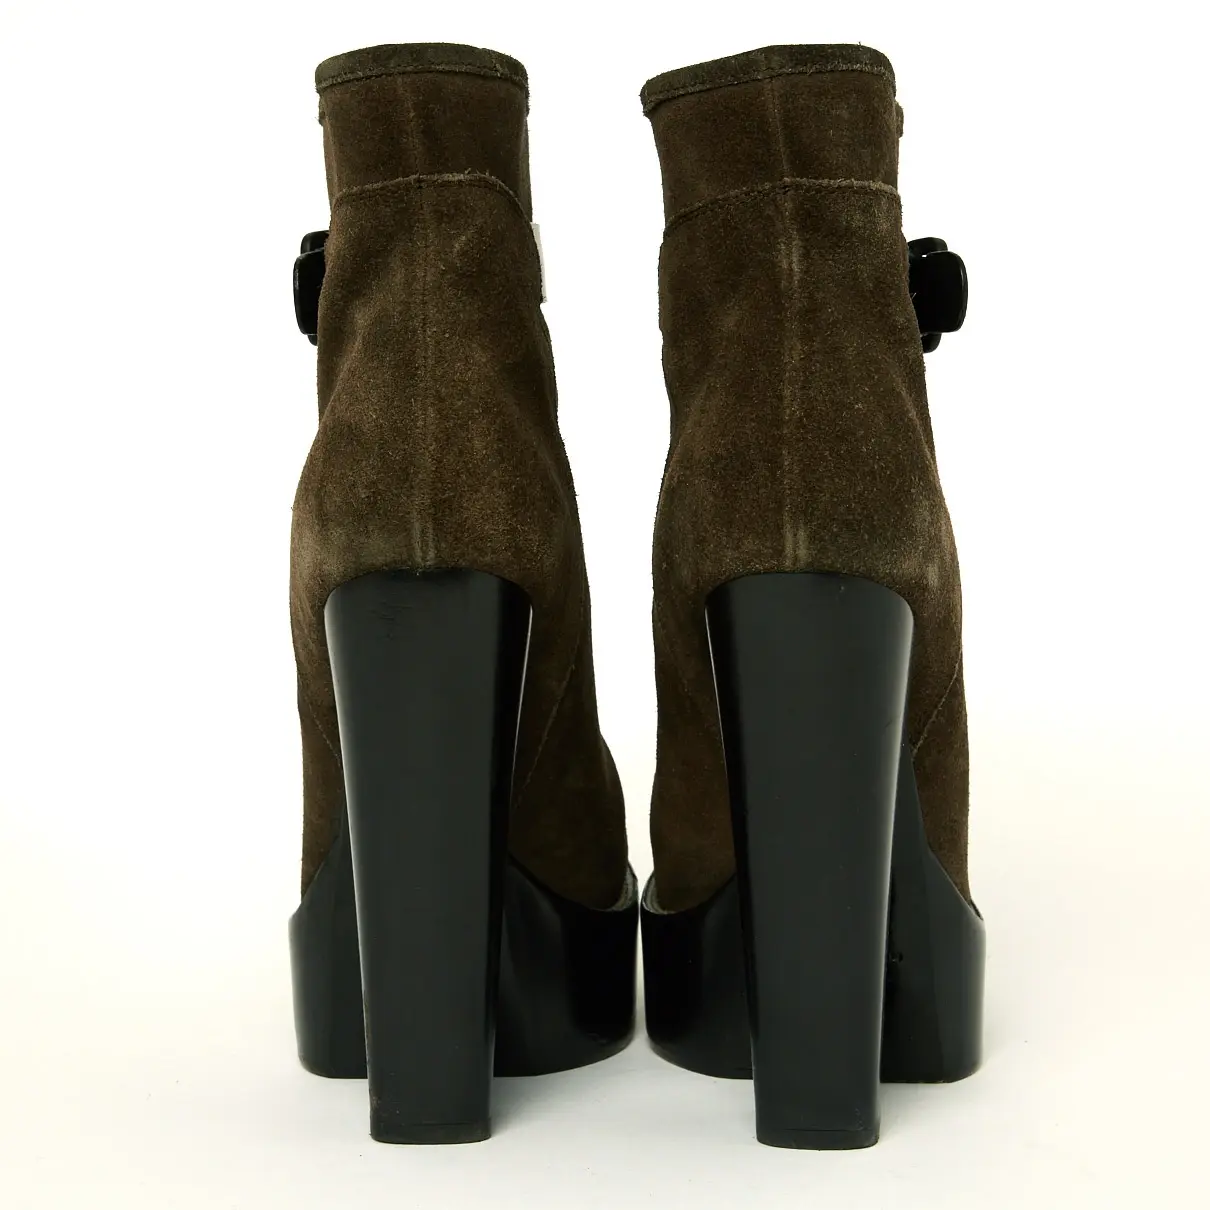 Luxury Balenciaga Ankle boots Women